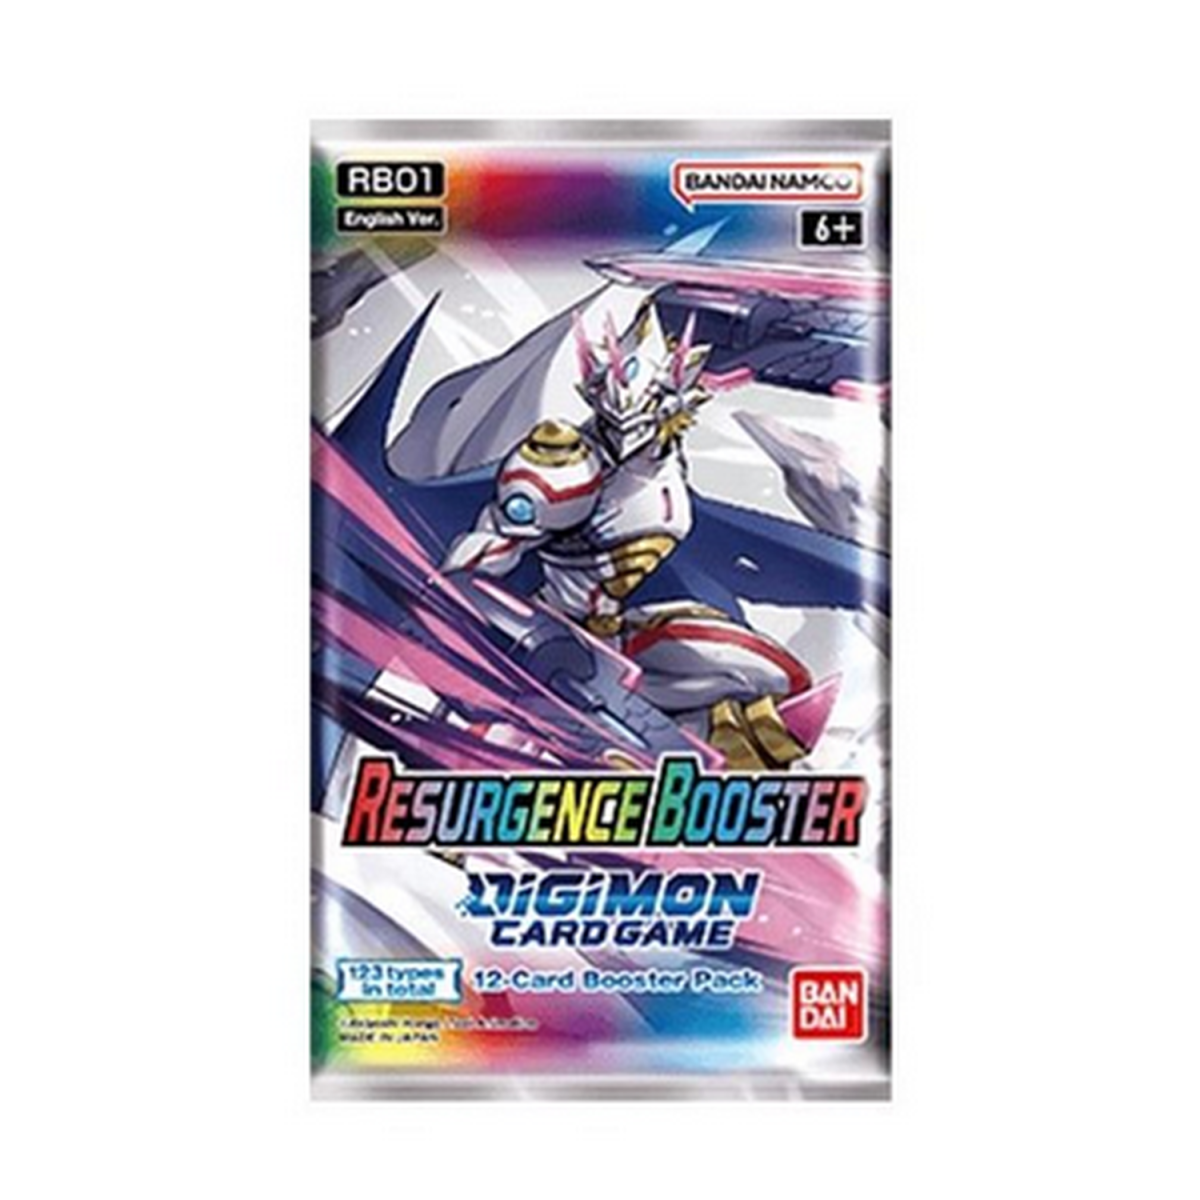 Item Digimon Card Game - Booster - Resurgence Booster - RB01 - EN